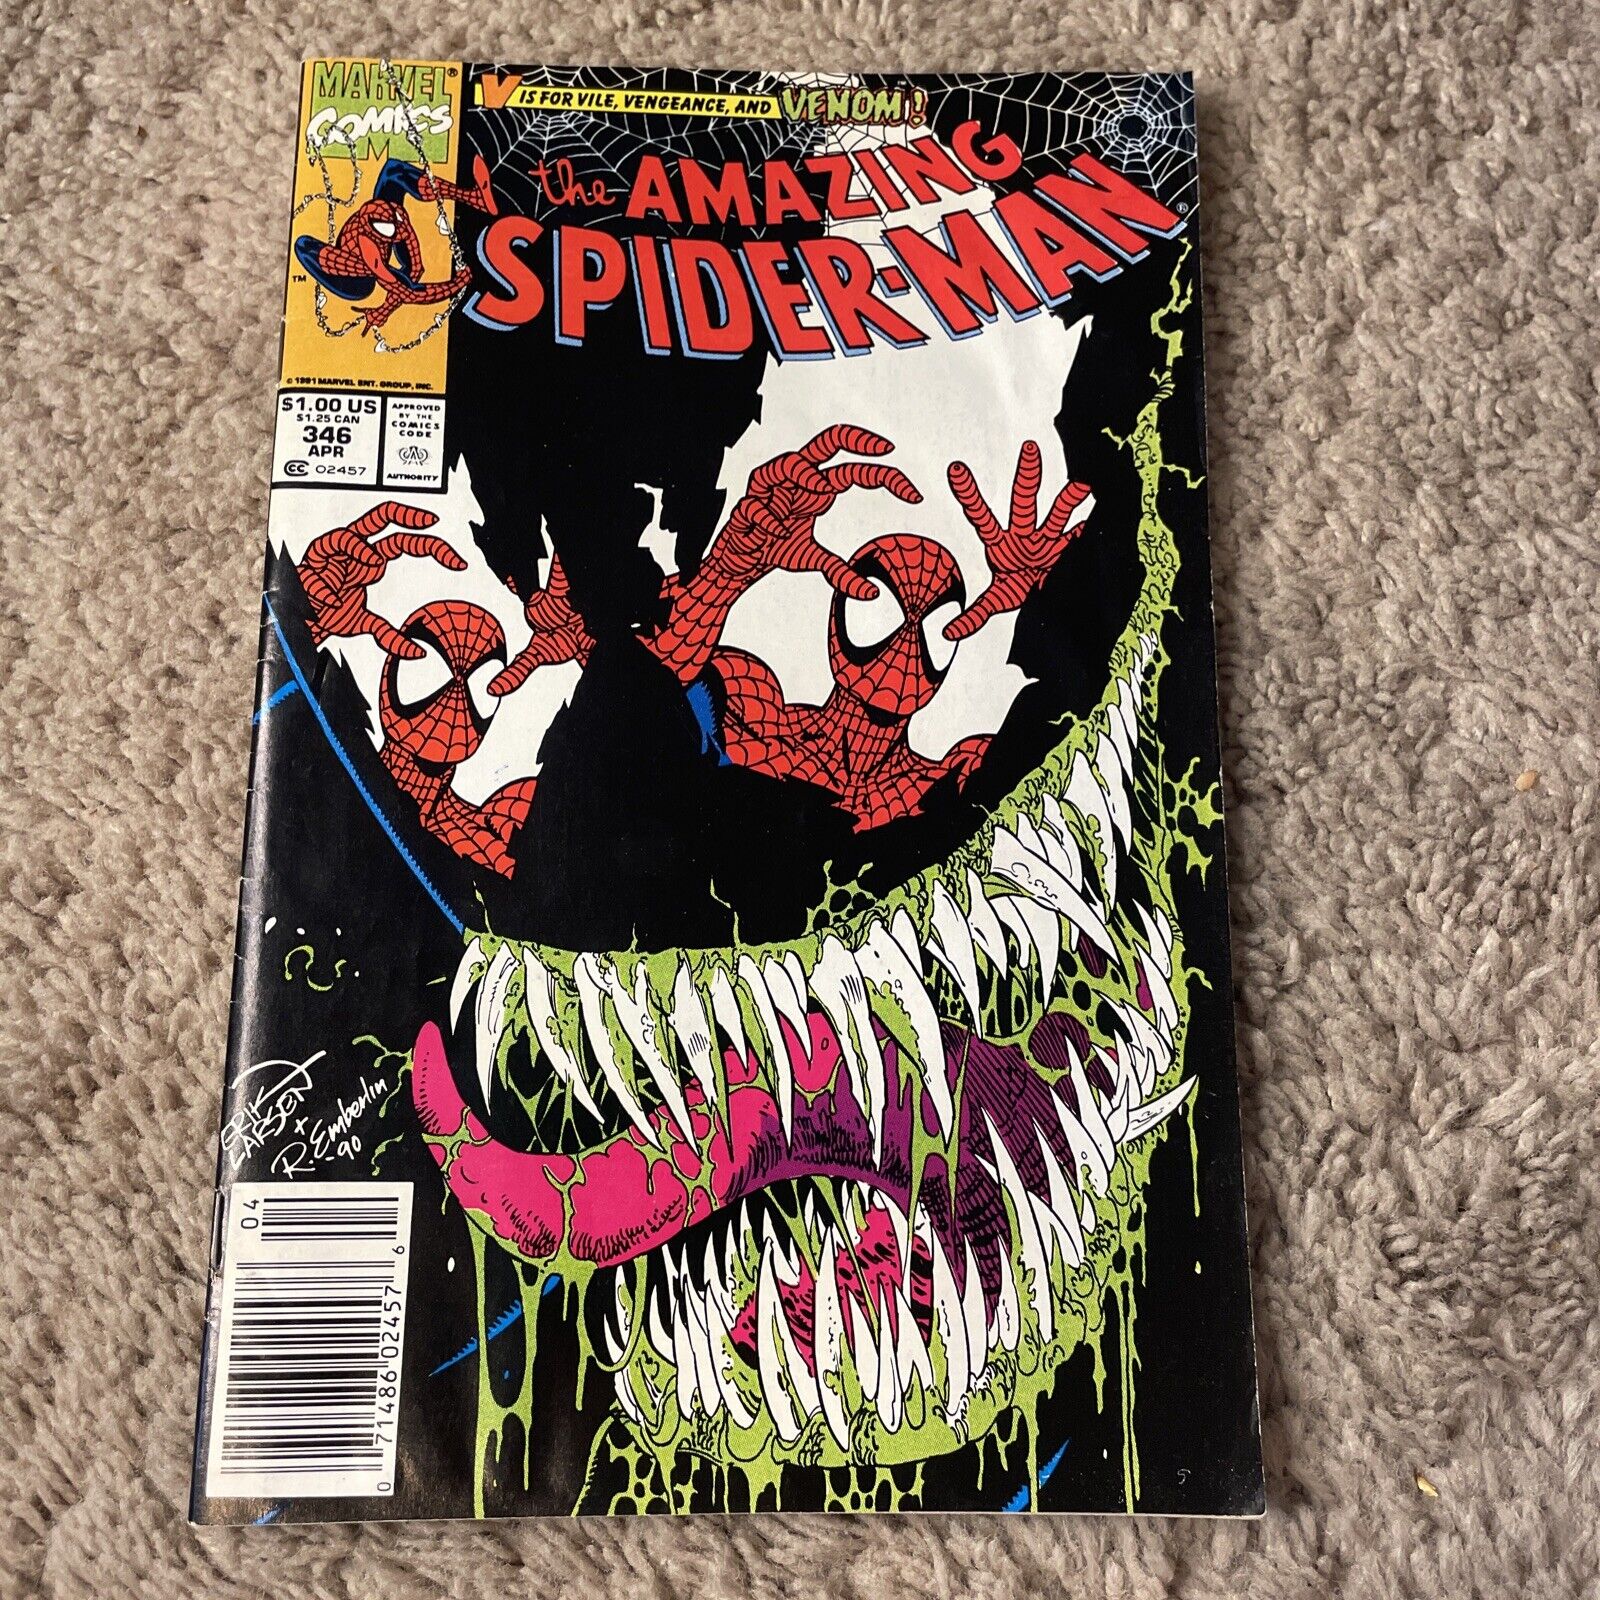 The Amazing Spider-Man #346 (Marvel Comics April 1991)